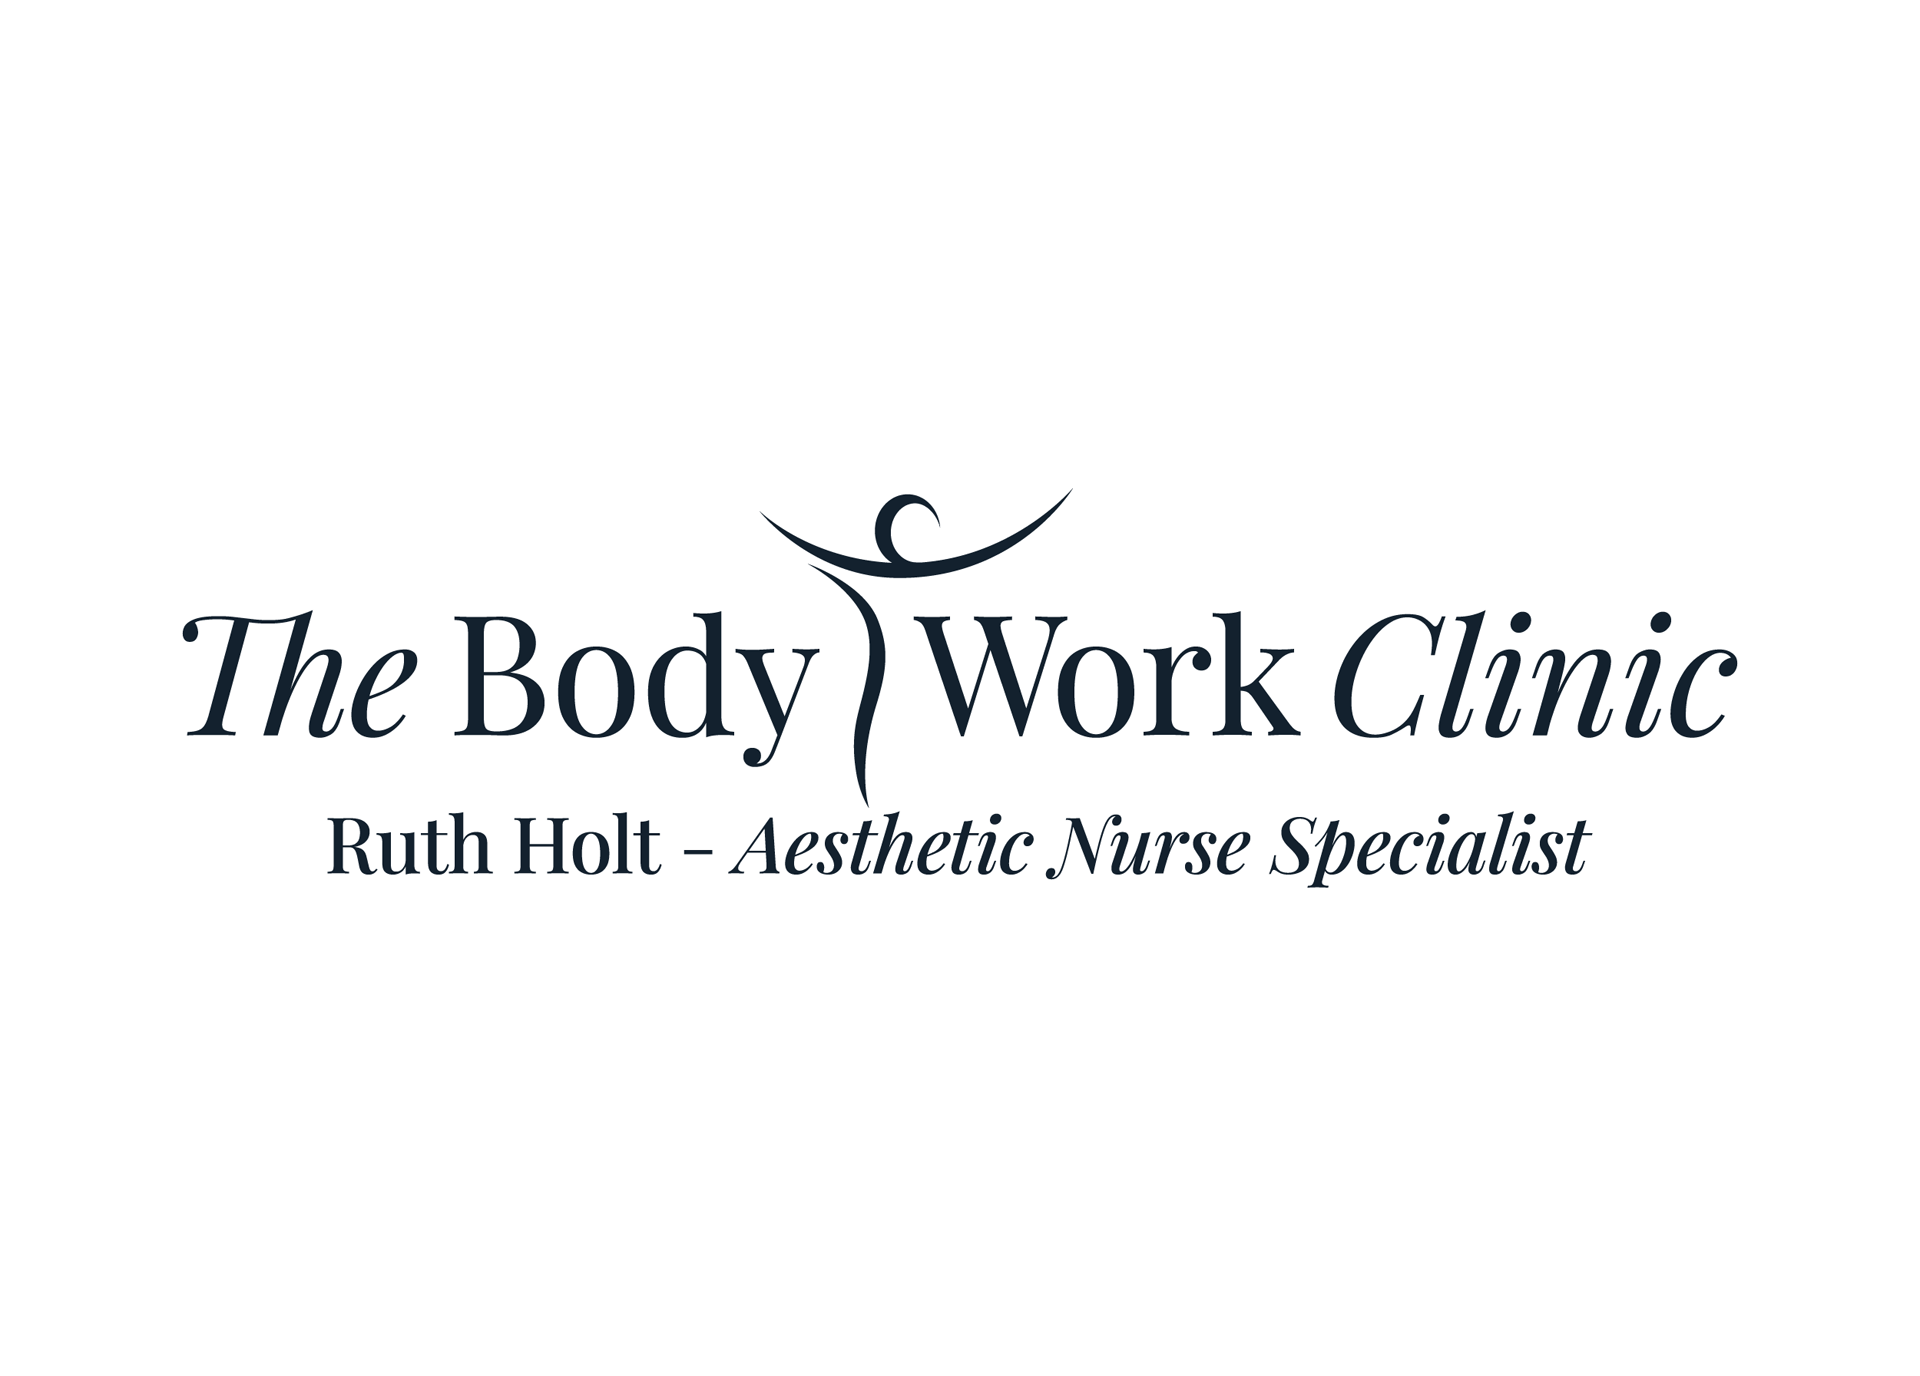 The Body Work Clinic brand design